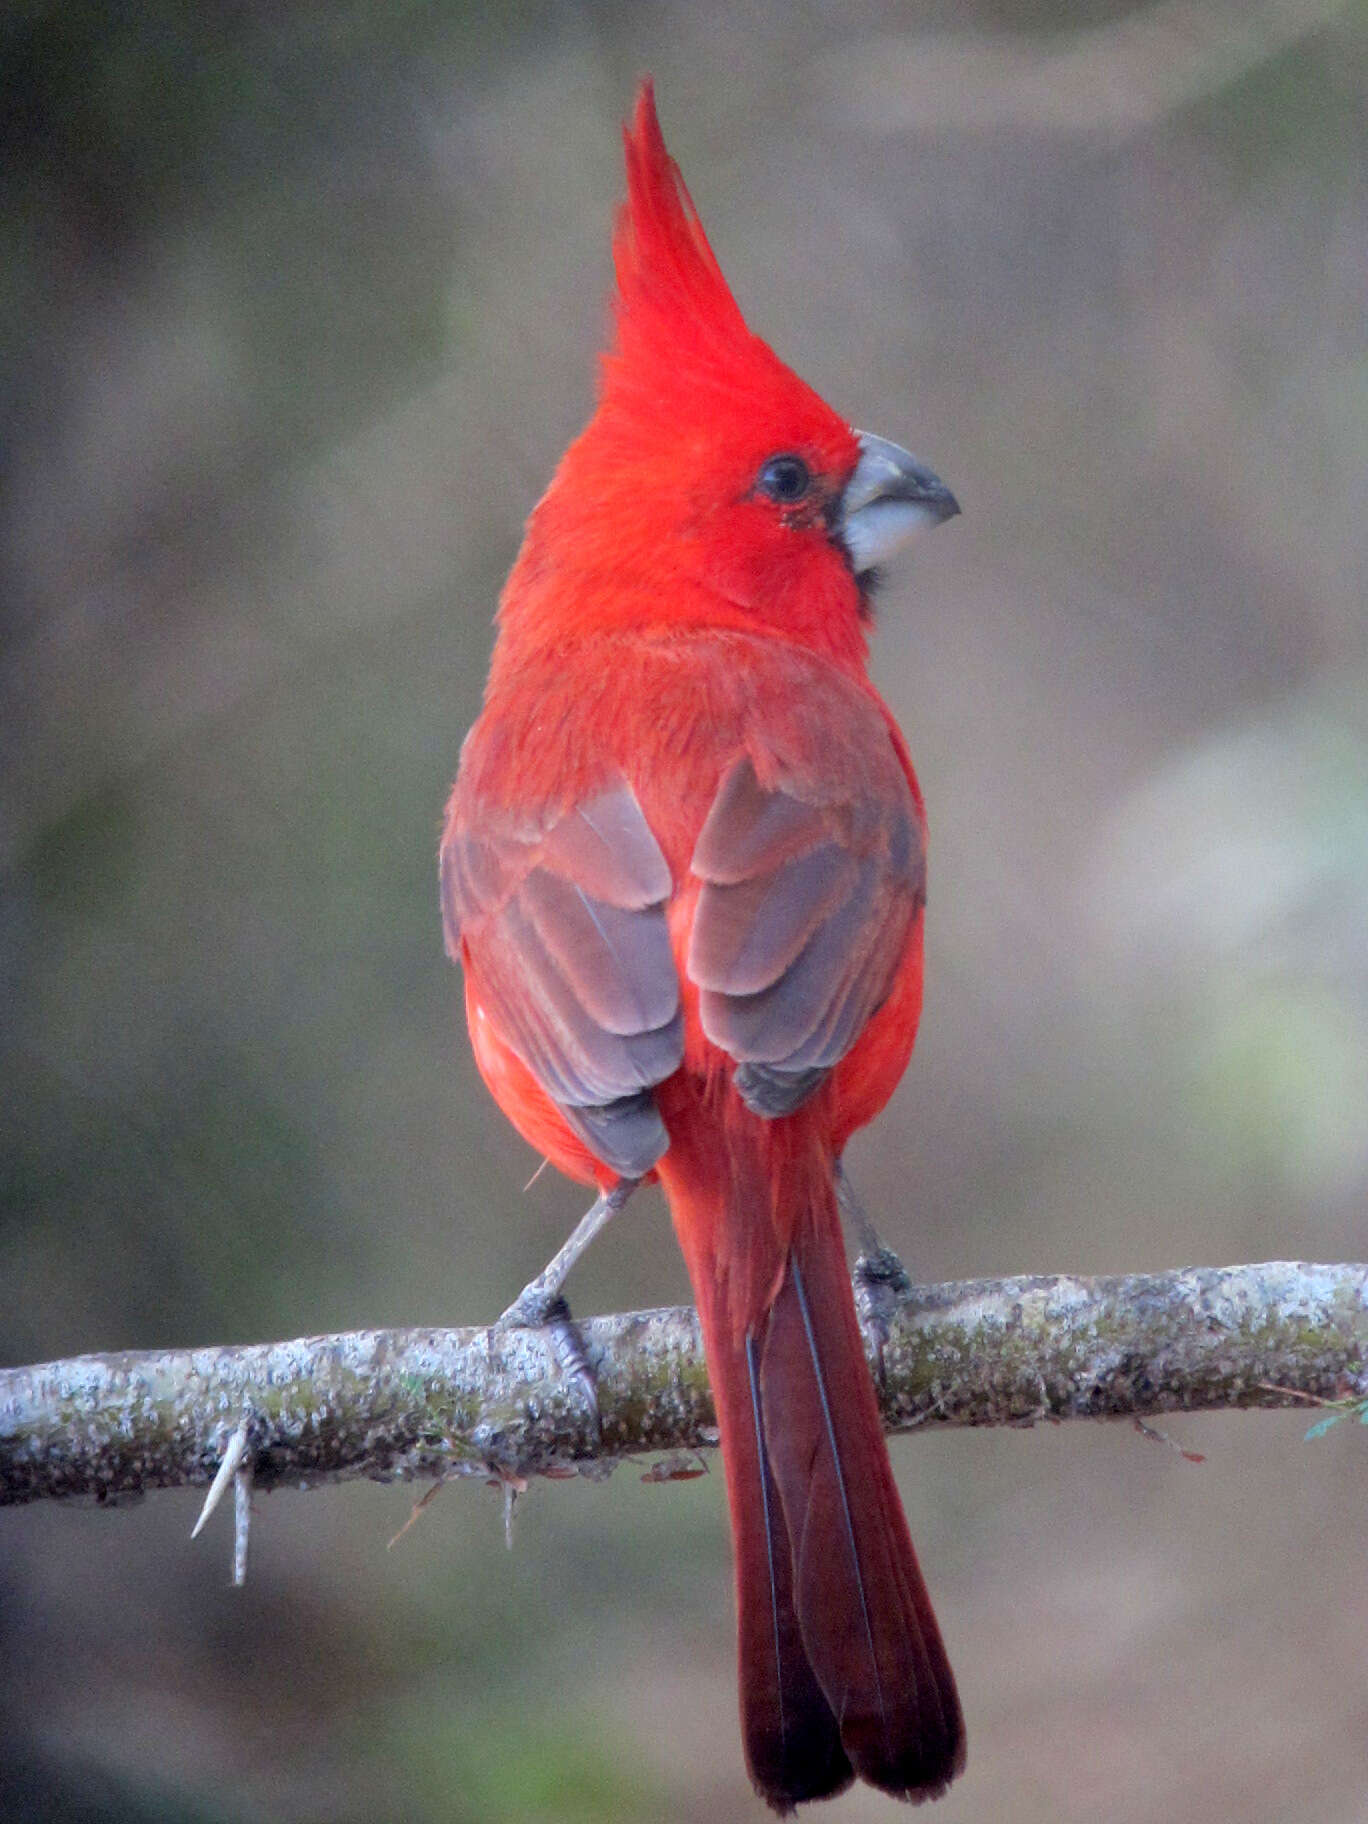 Image of Vermilion Cardinal